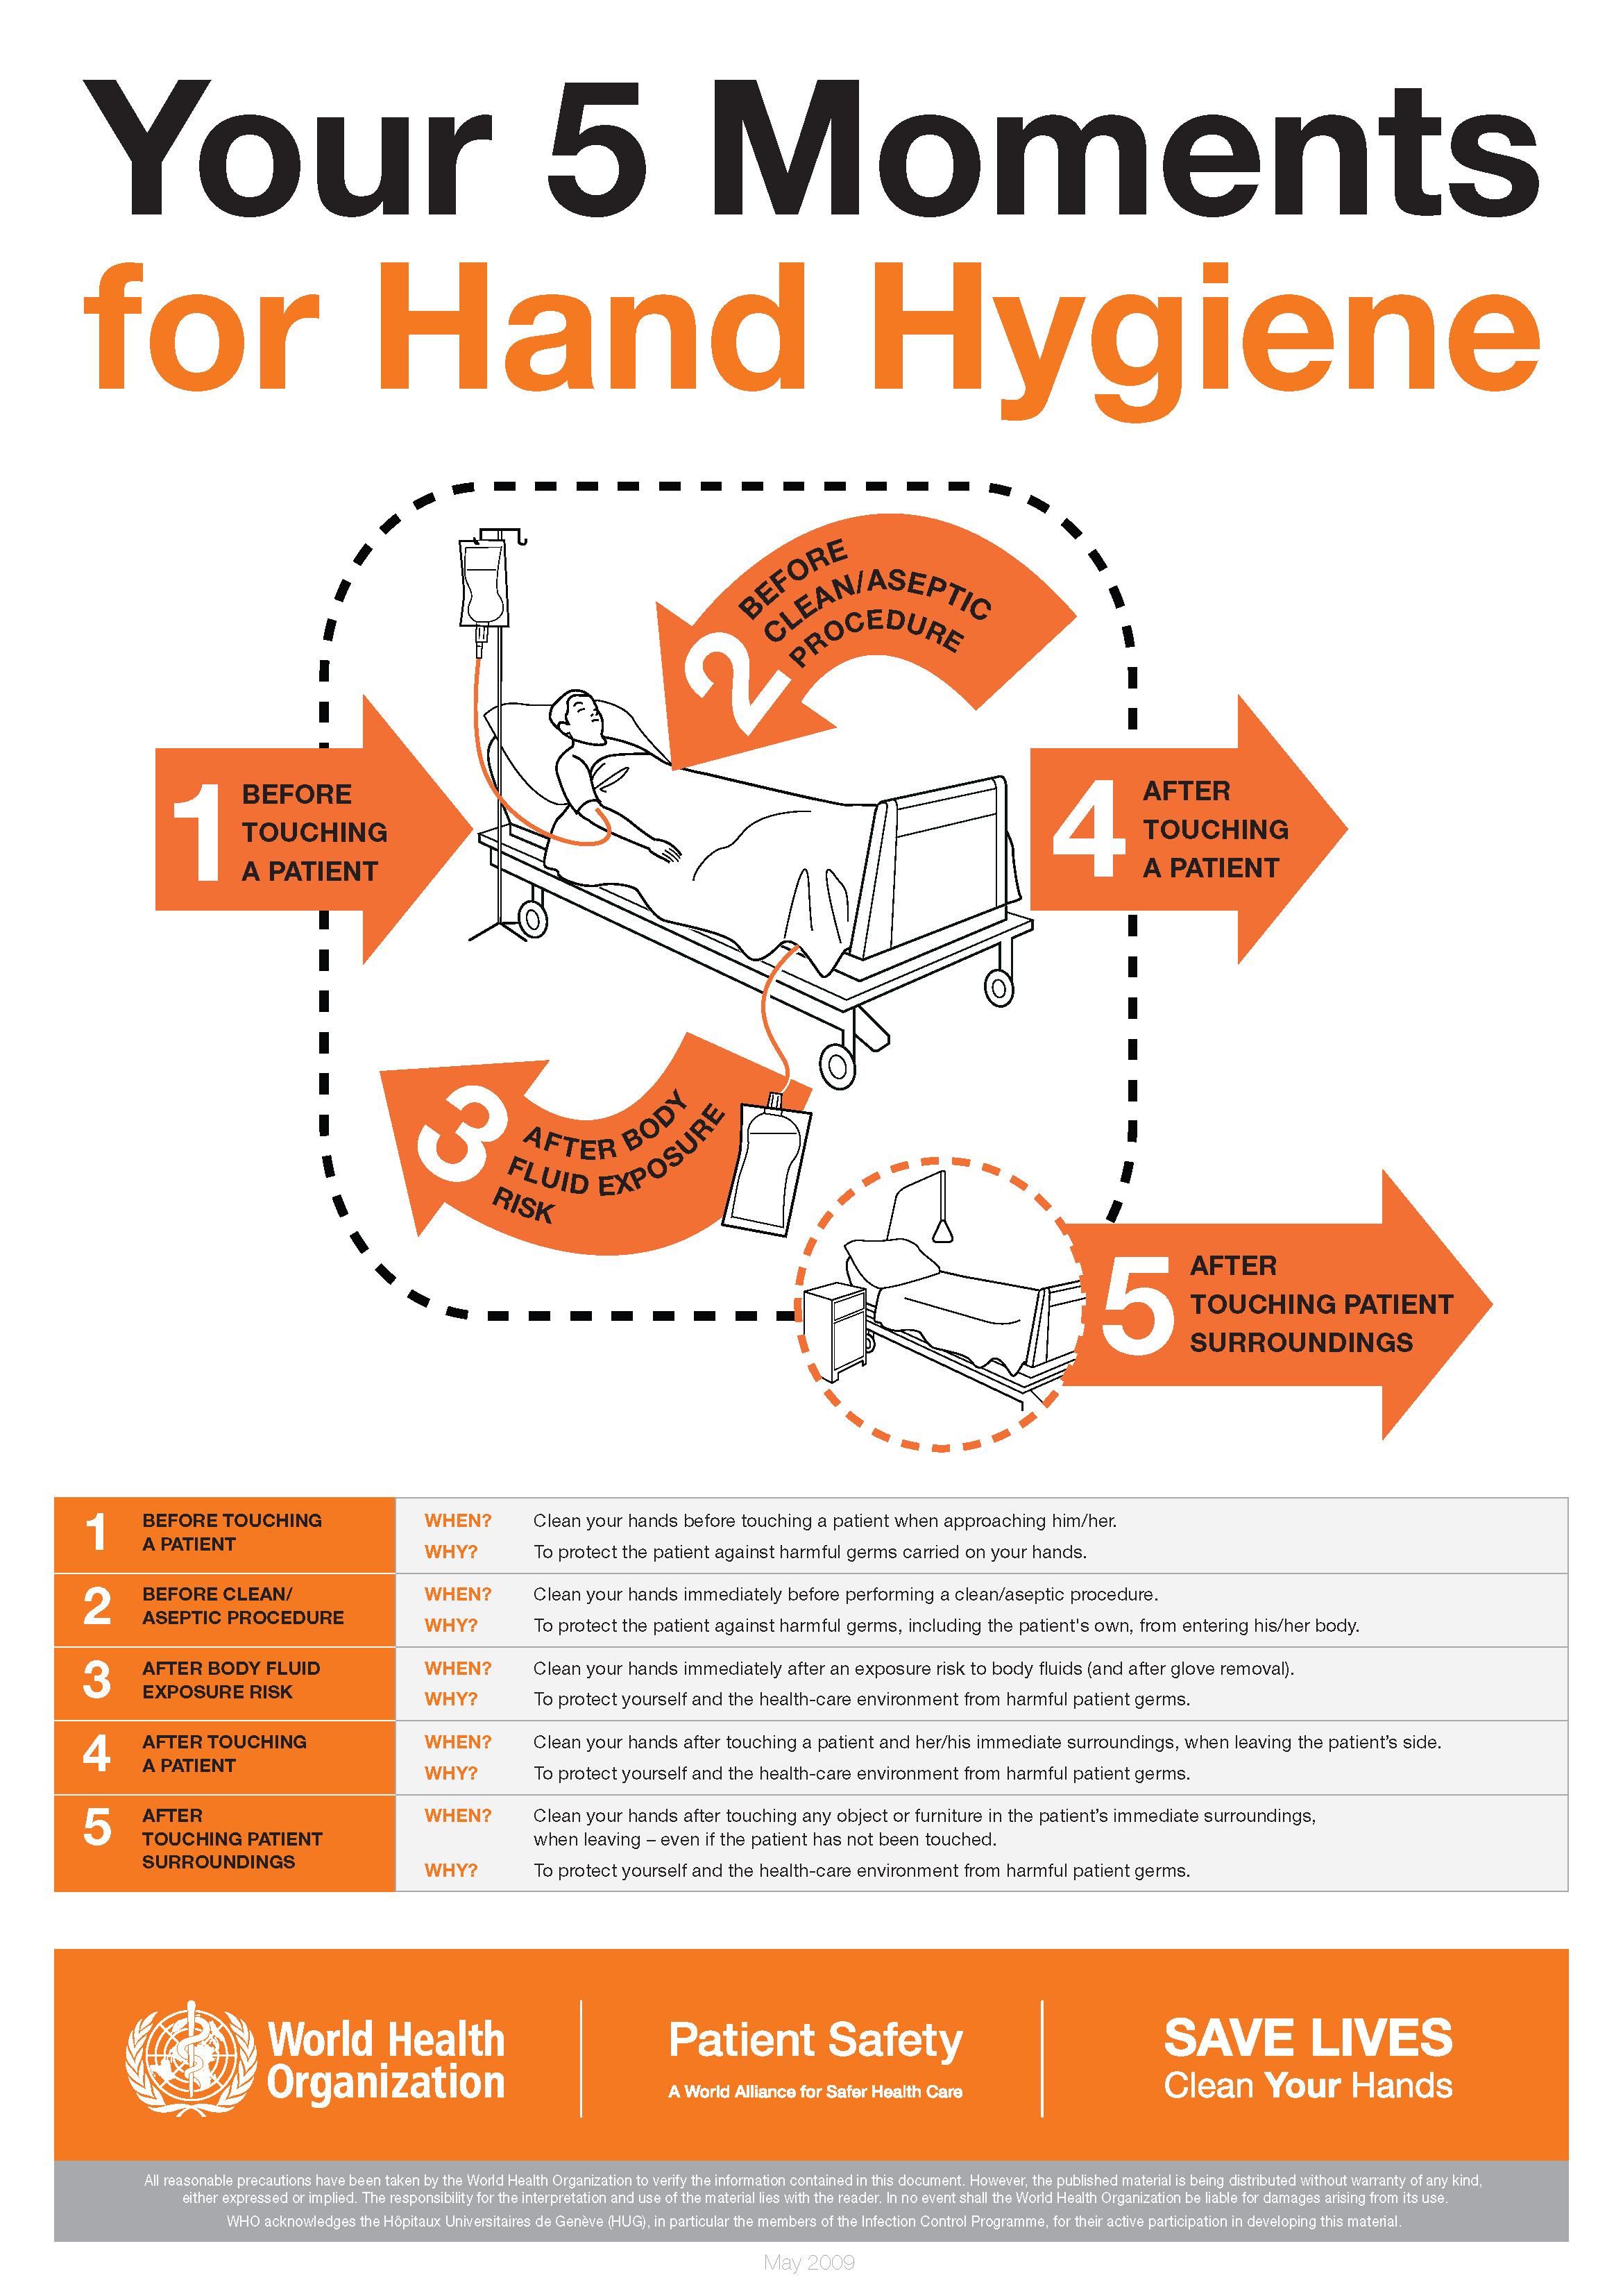 Standard precautions: Hand hygiene